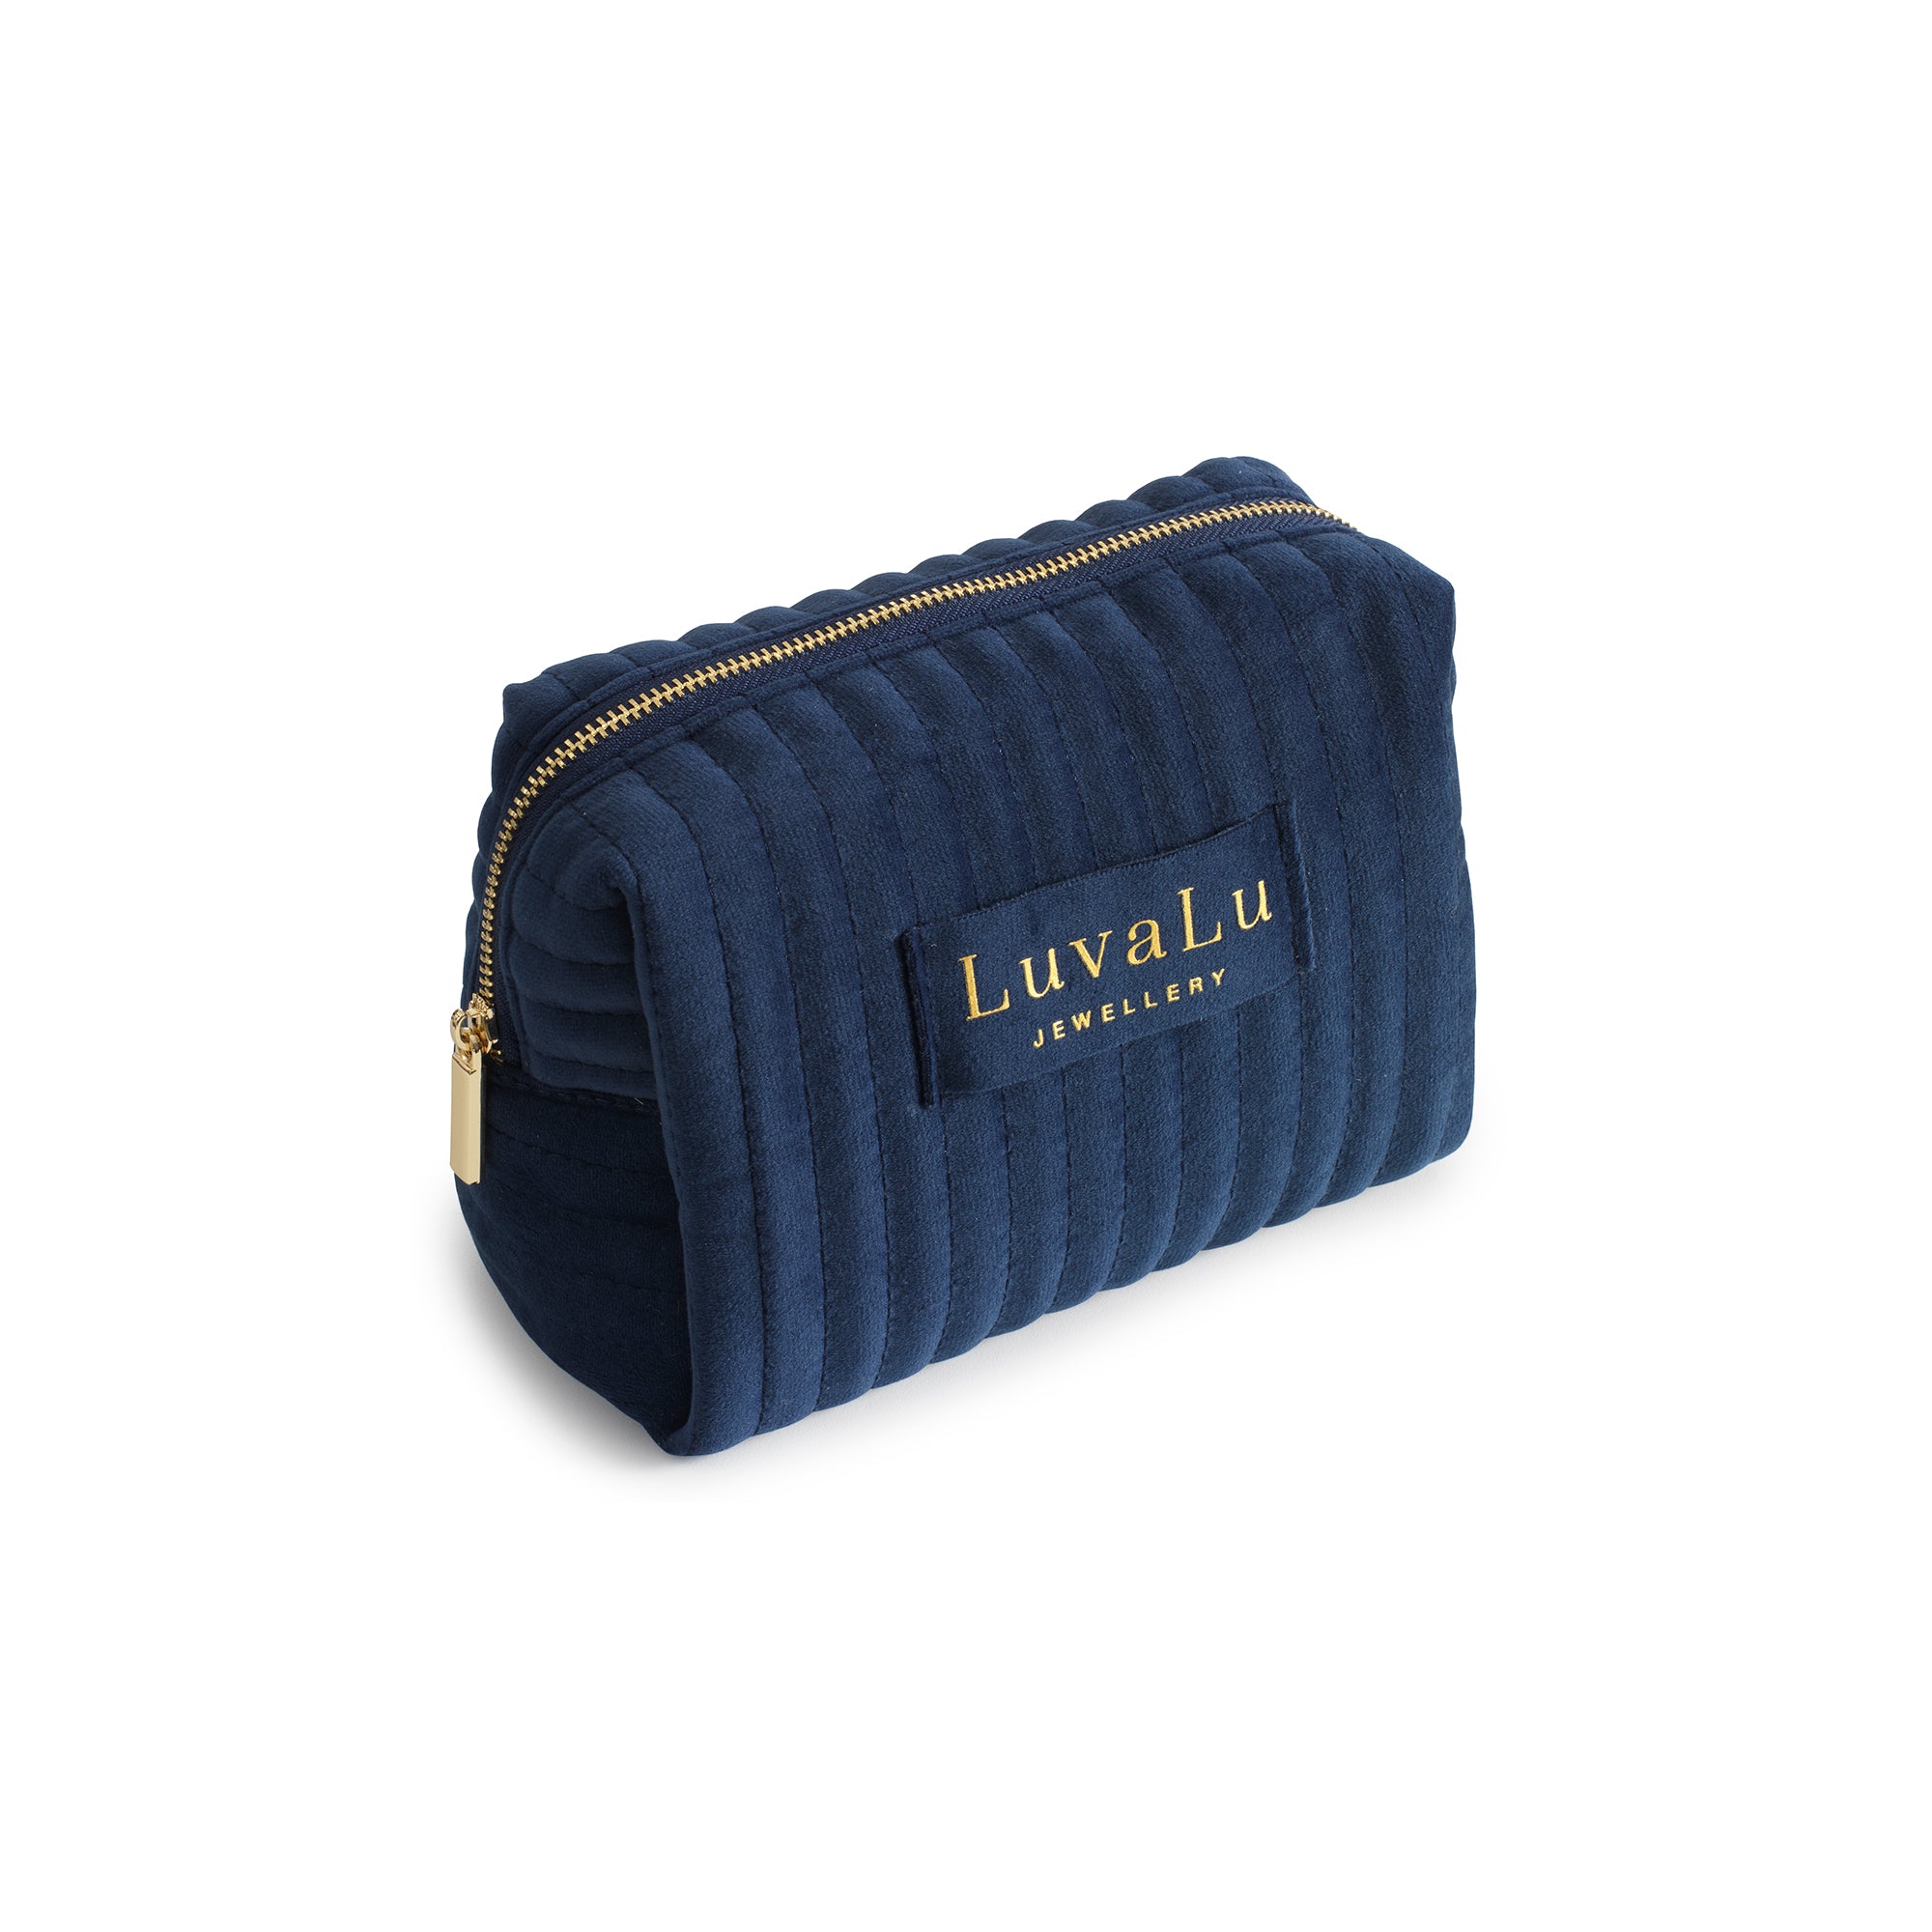 Se LuvaLu Jewellery - Small Navy blue Makeup bag hos Vibholm.dk